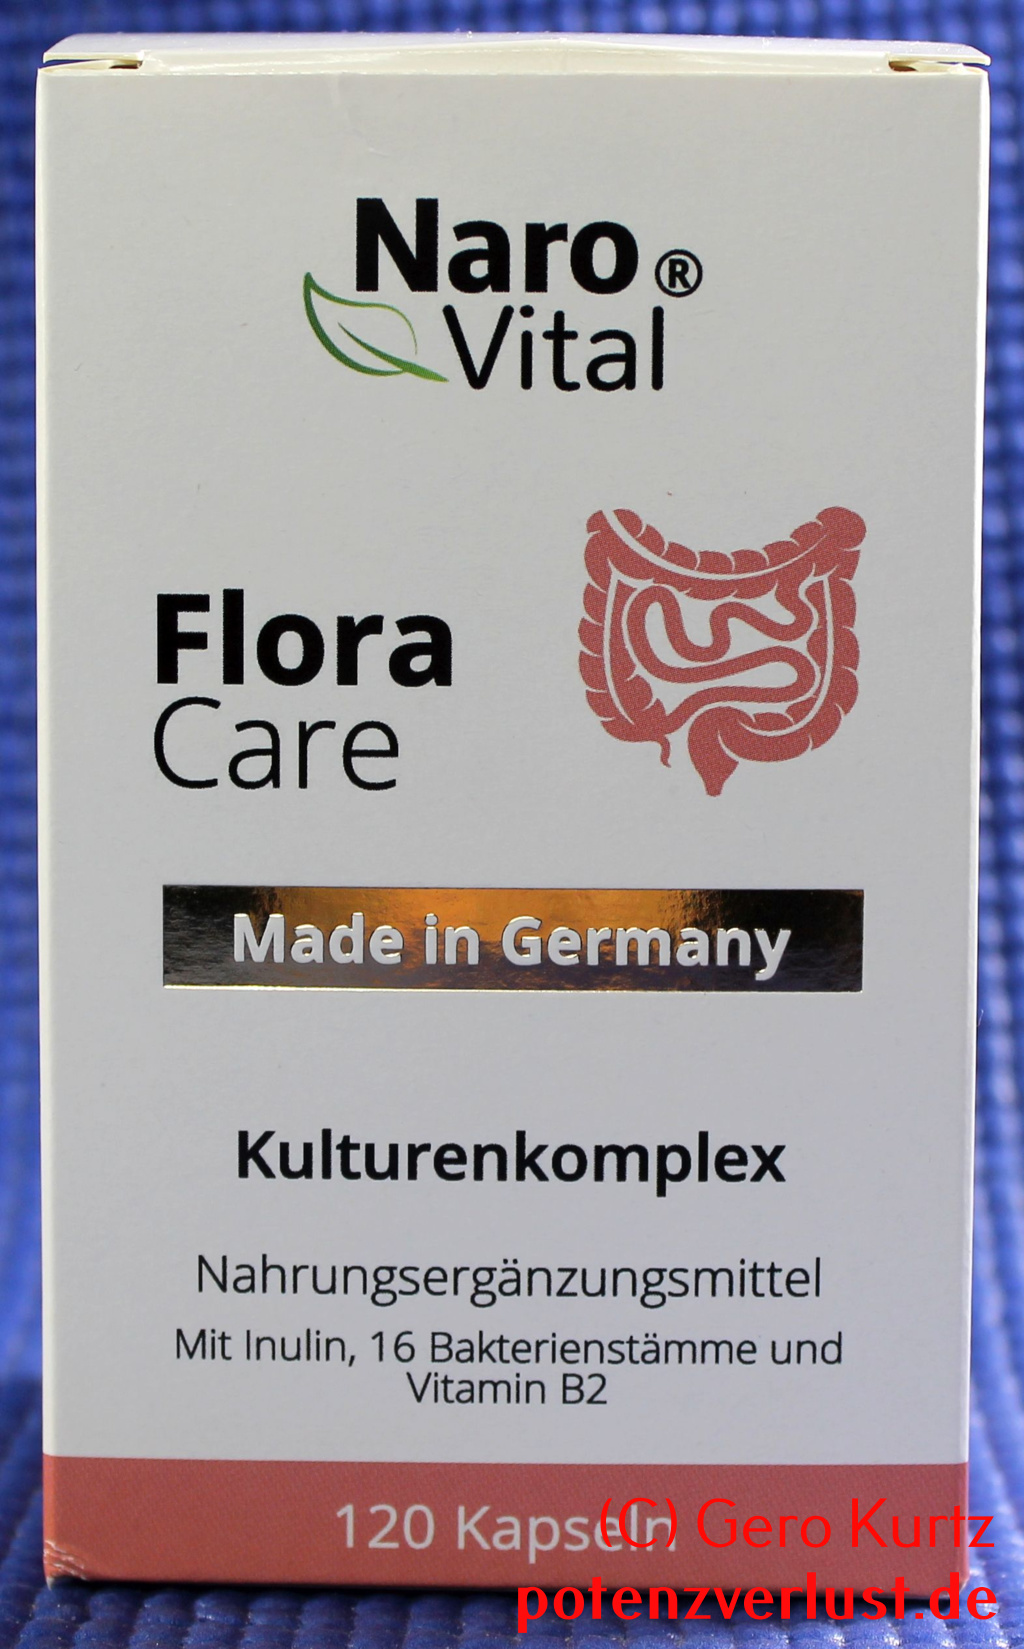 Naro Vital Flora Care - Verpackung Vorderseite